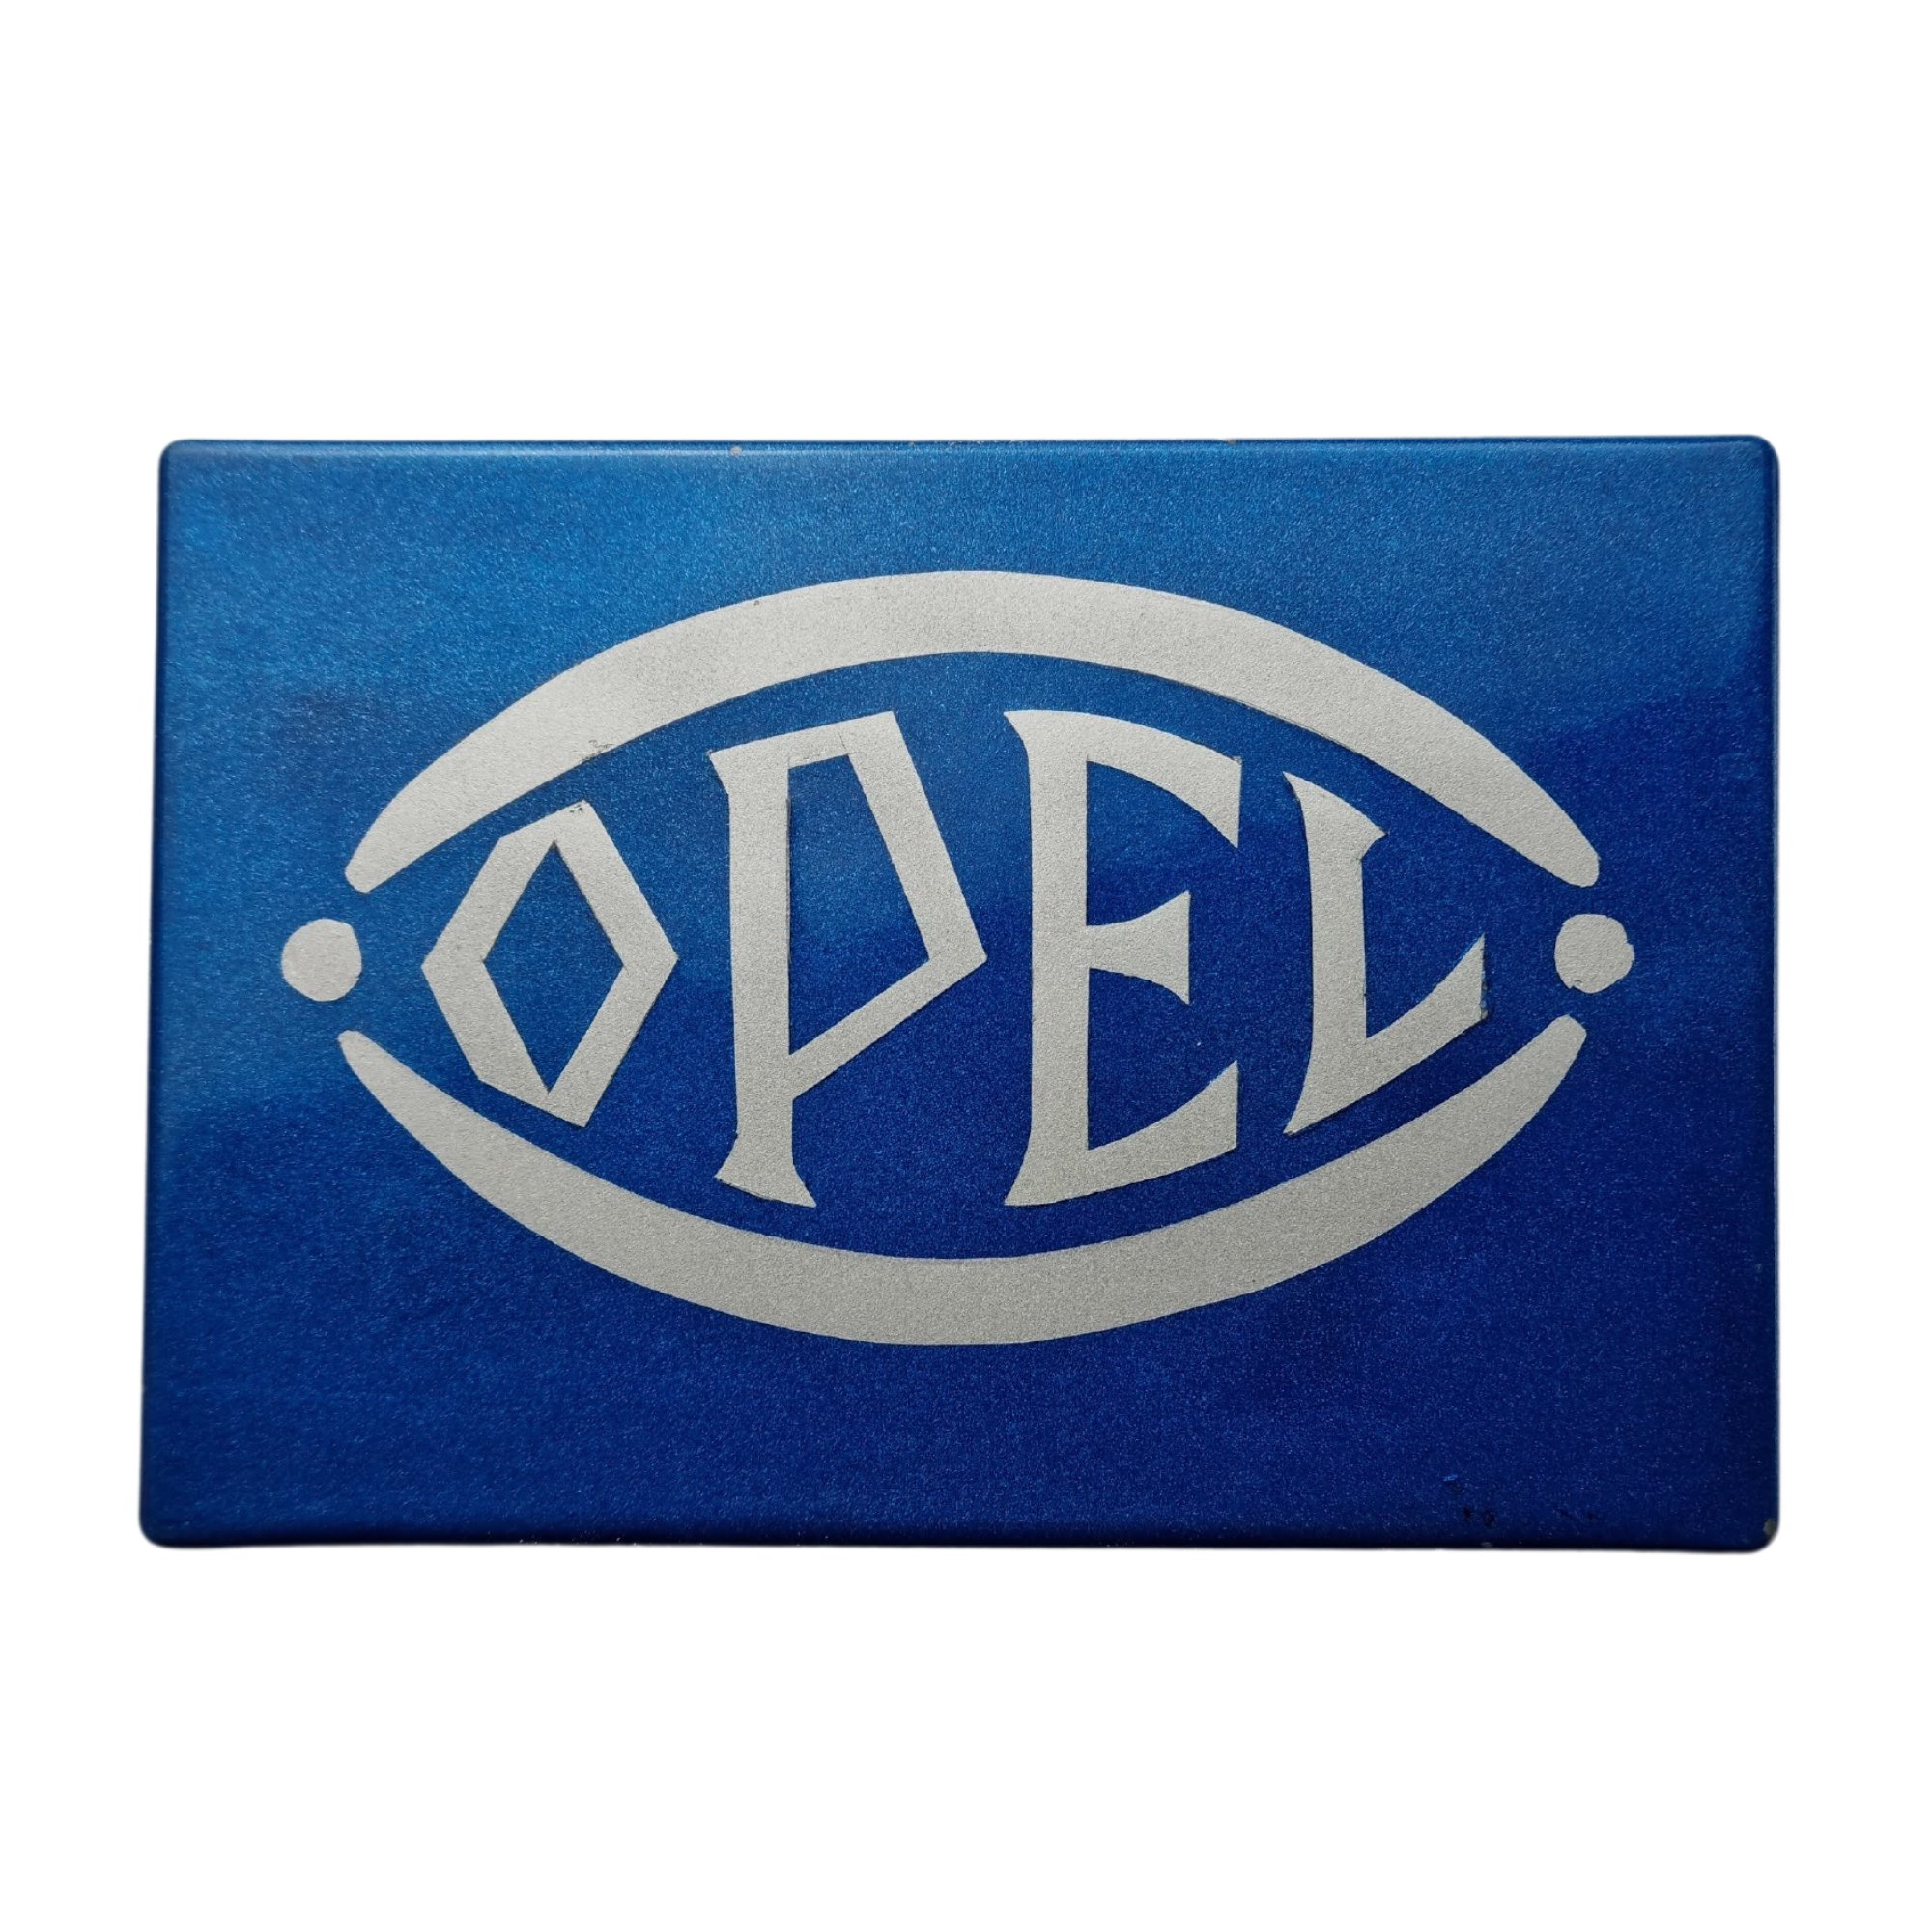 OPEL-Emblem (Deutsches Straßenmuseum e.V. CC BY-NC-SA)